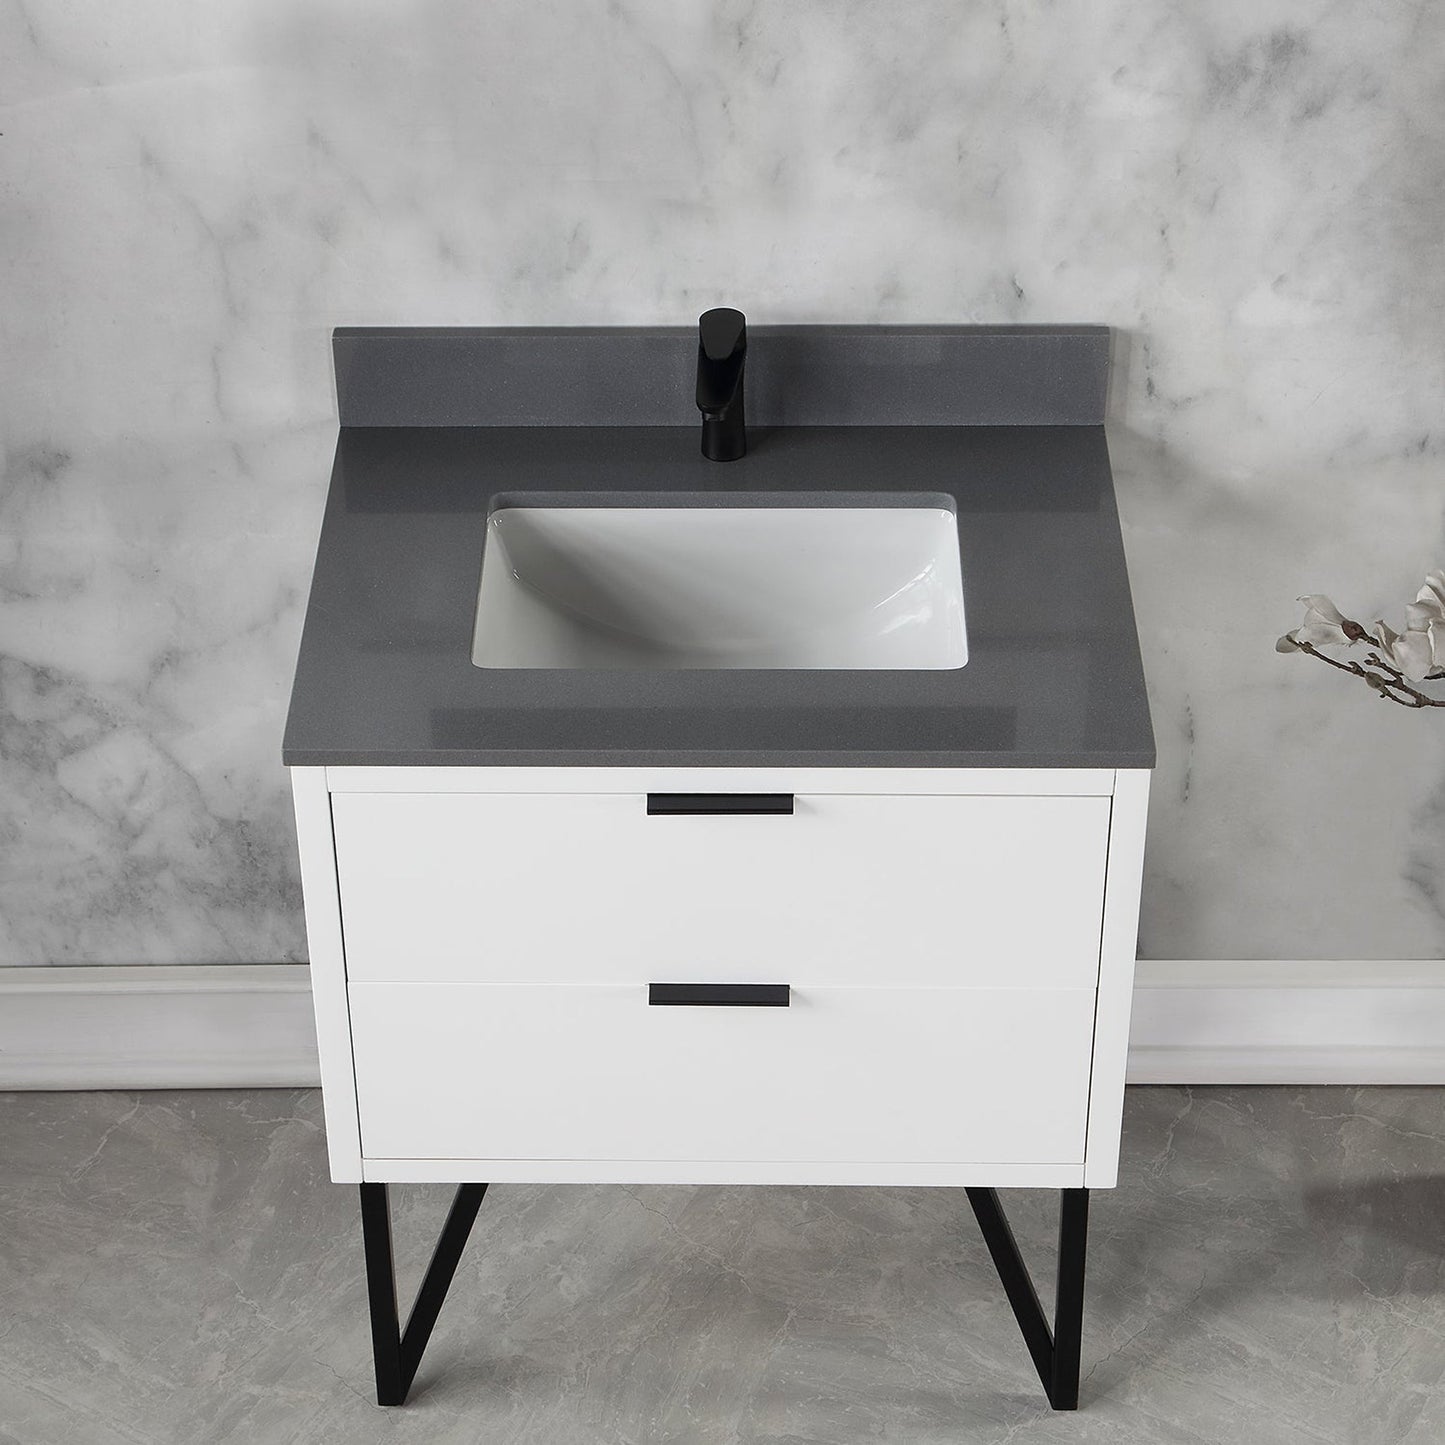 Altair Helios 30" White Freestanding Single Bathroom Vanity Set With Concrete Gray Composite Stone Top, Single Rectangular Undermount Ceramic Sink, Overflow, and Backsplash